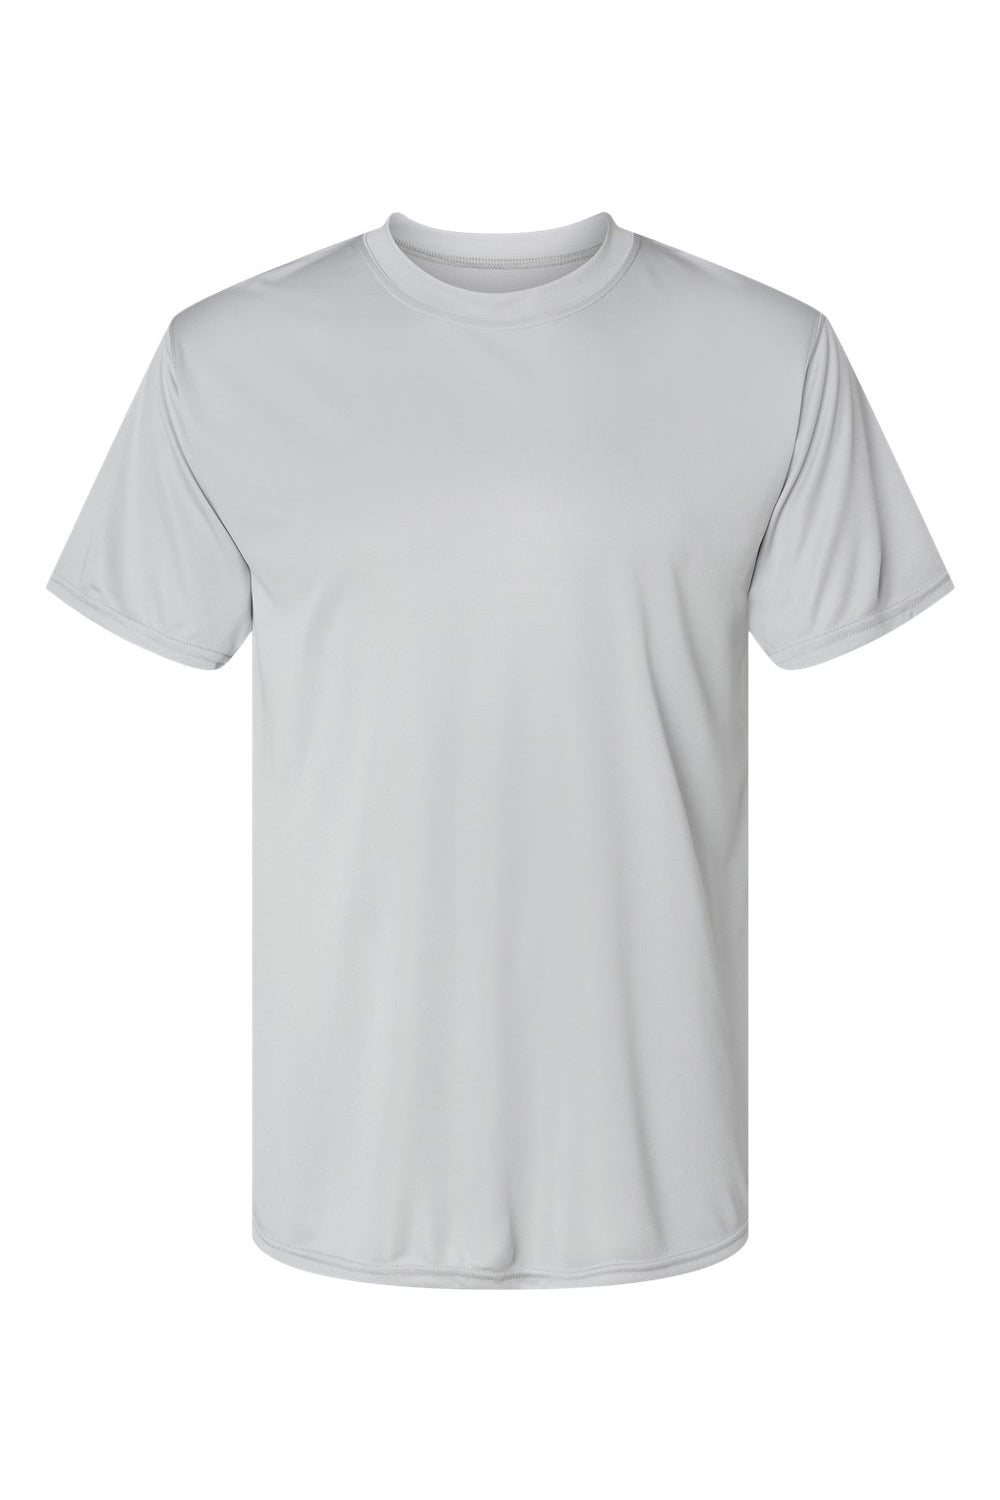 Holloway 222818 Mens Momentum Short Sleeve Crewneck T-Shirt Silver Grey Flat Front